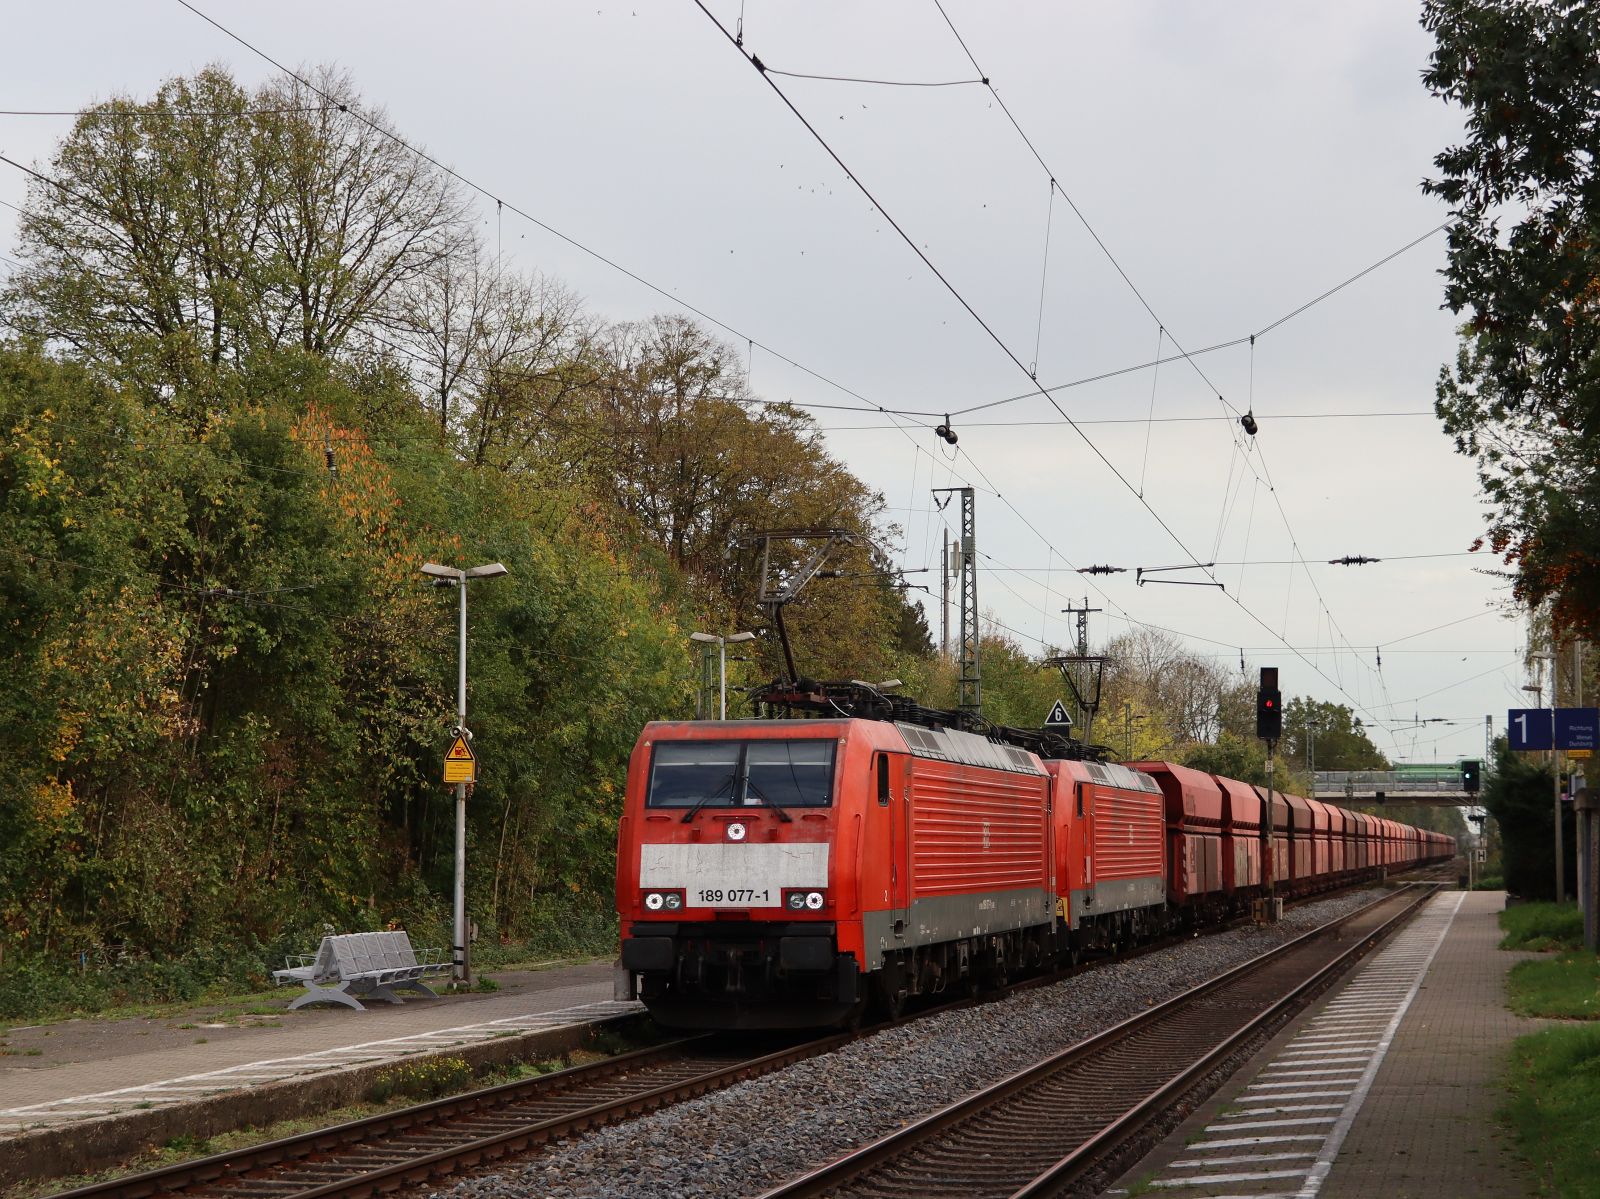 DB Cargo Lokomotive 189 077-1 mit Schwesterlok Gleis 2 Bahnhof Empel-Rees 03-11-2022.

DB Cargo locomotief 189 077-1 met zusterloc spoor 2 station Empel-Rees 03-11-2022.